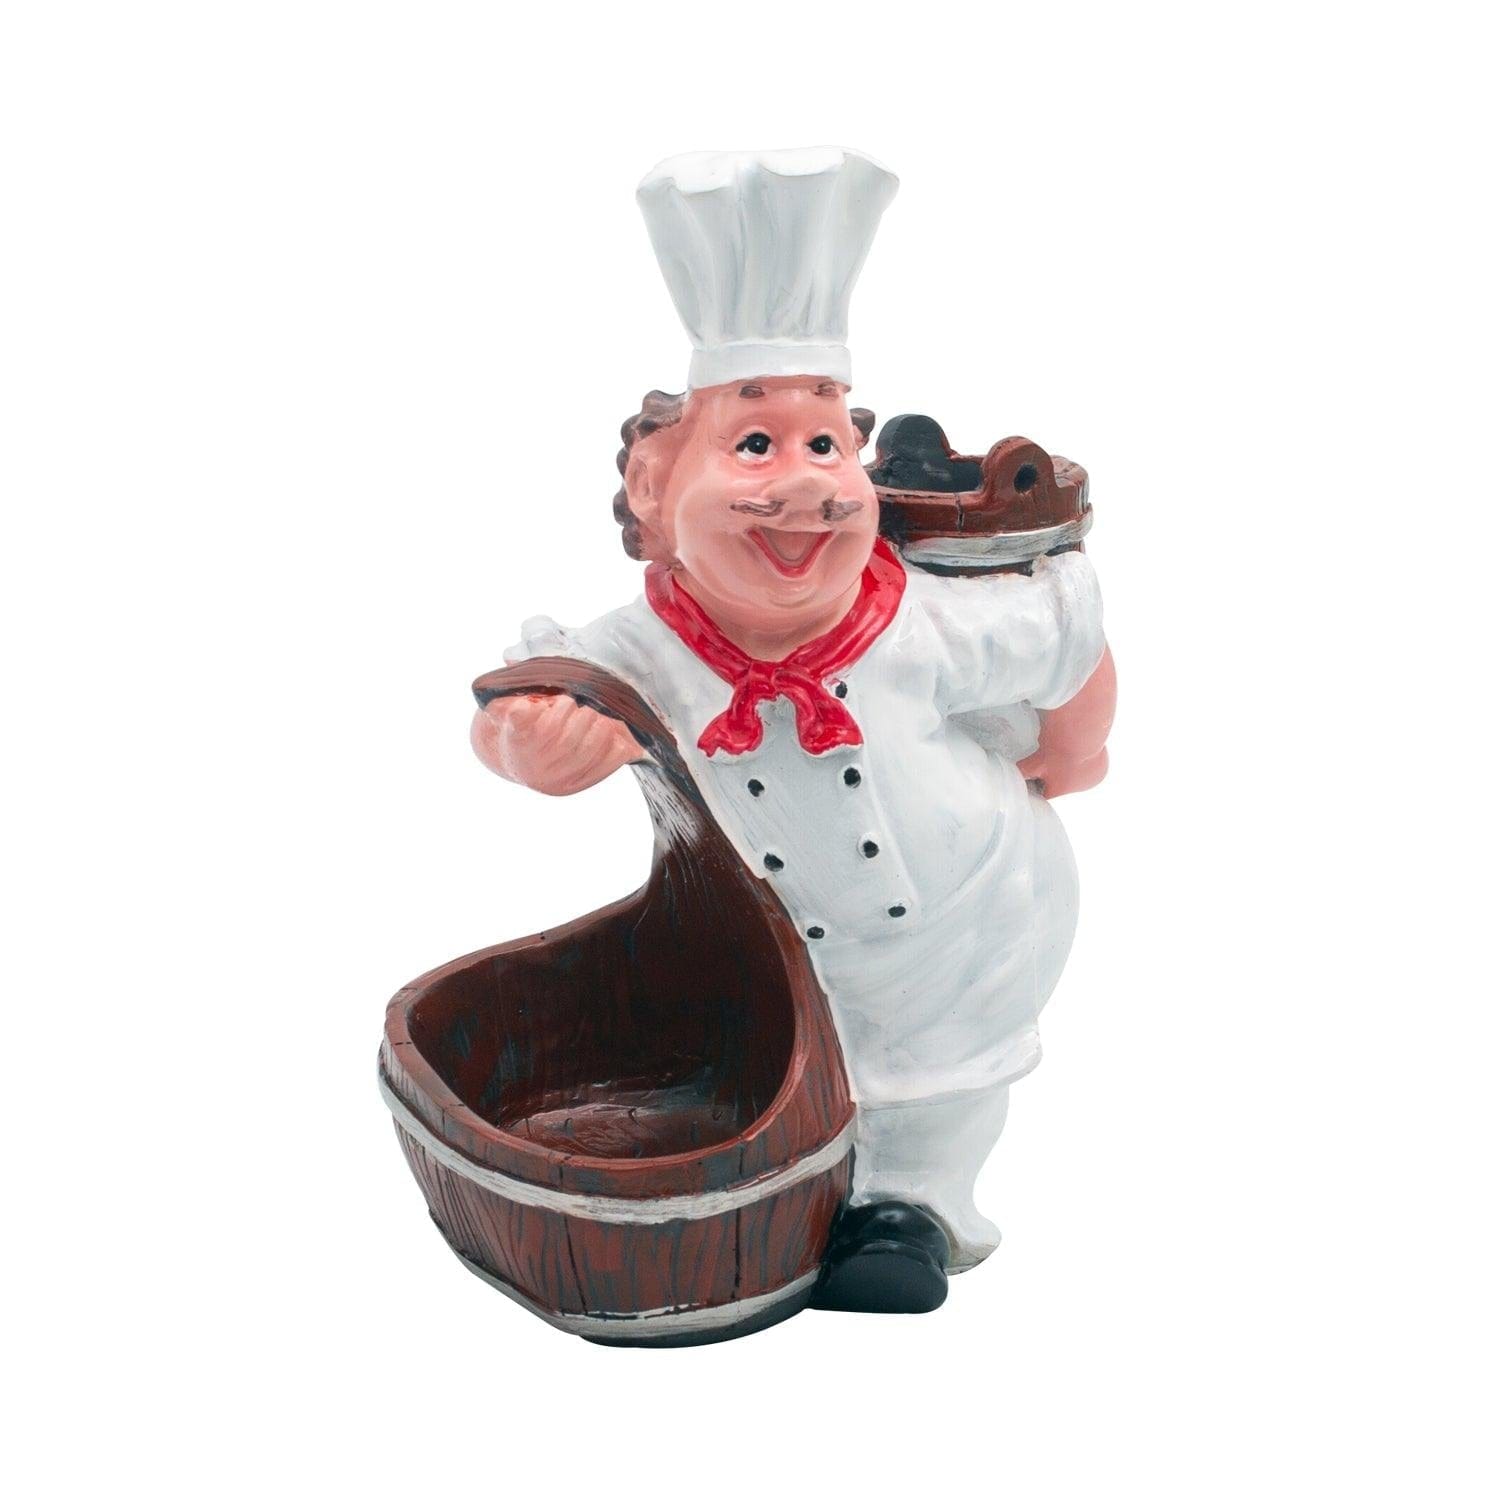 Foodie Chef Figurine Resin Salt & Pepper Shakers with Toothpick Holder Set (Basket on Back)